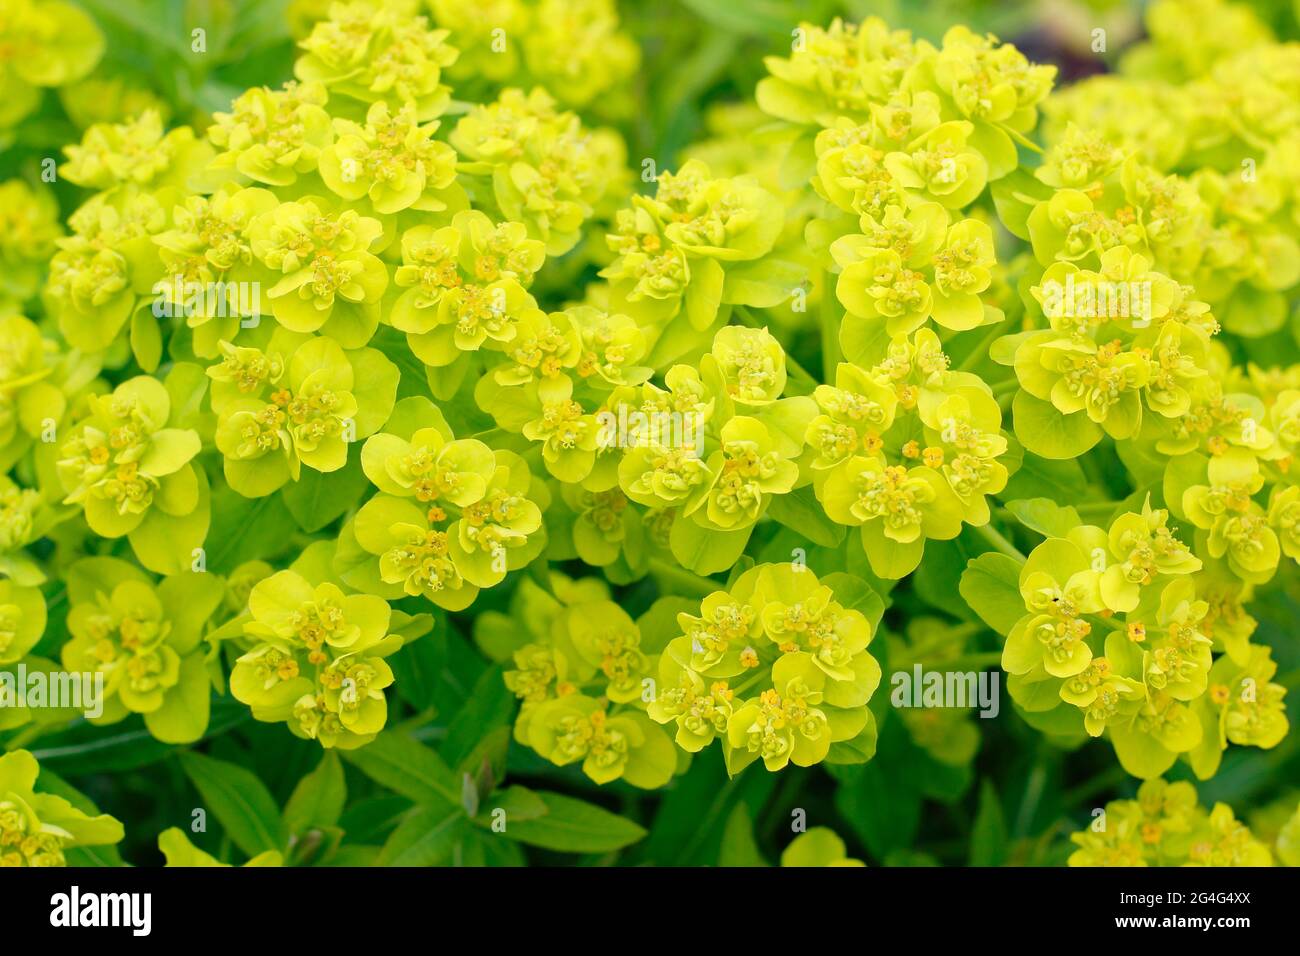 Euphorbia palustris, or Mrsh spurge, displaying characteristic sulphur yellow flowers. Stock Photo